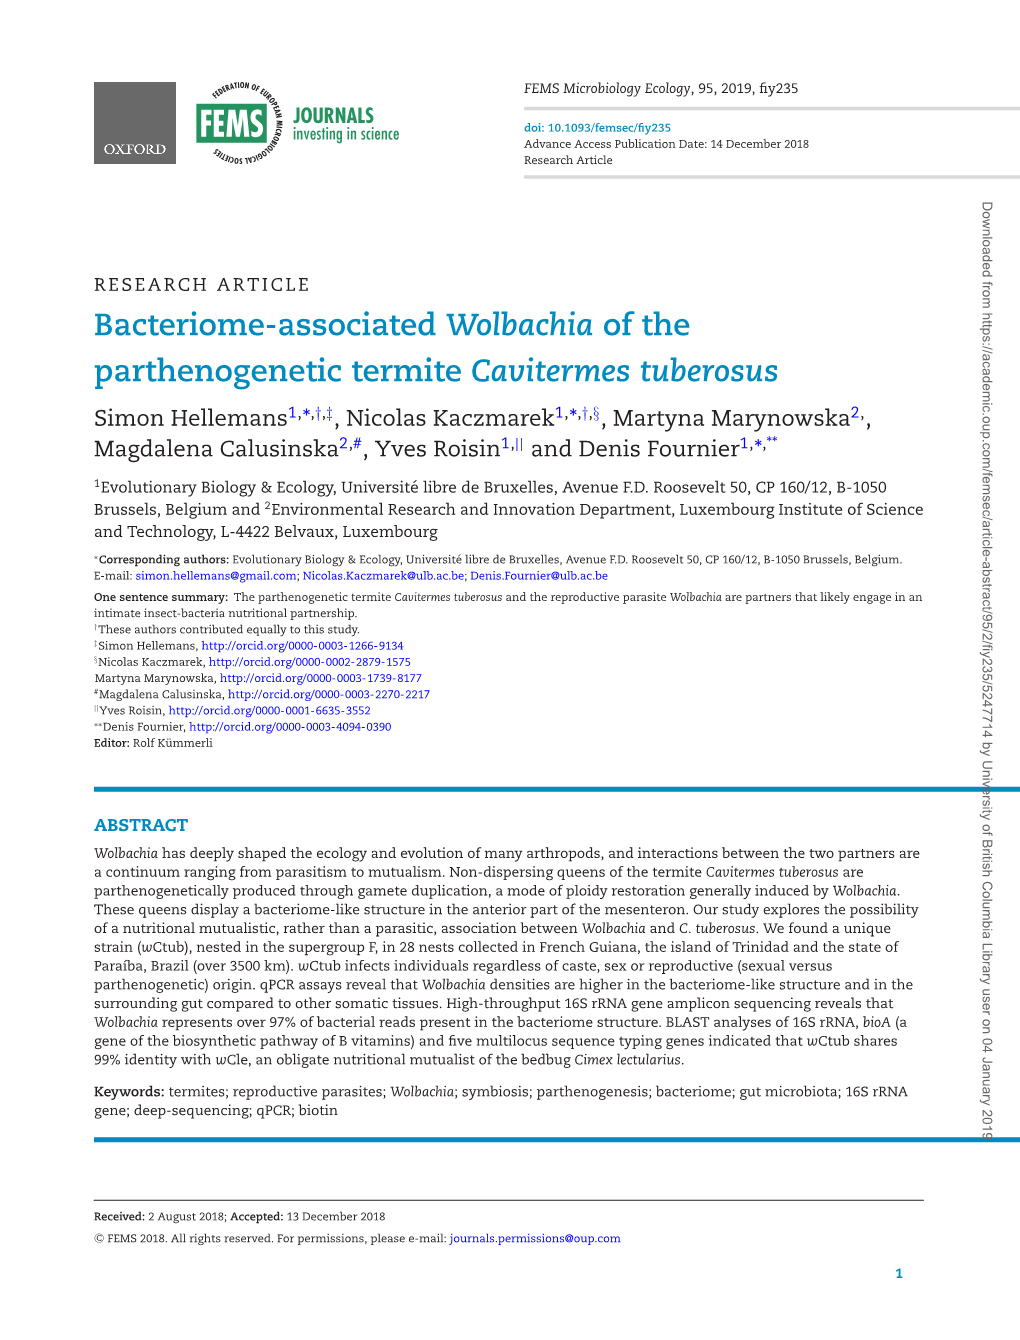 Bacteriome-Associated Wolbachia of the Parthenogenetic Termite Cavitermes Tuberosus